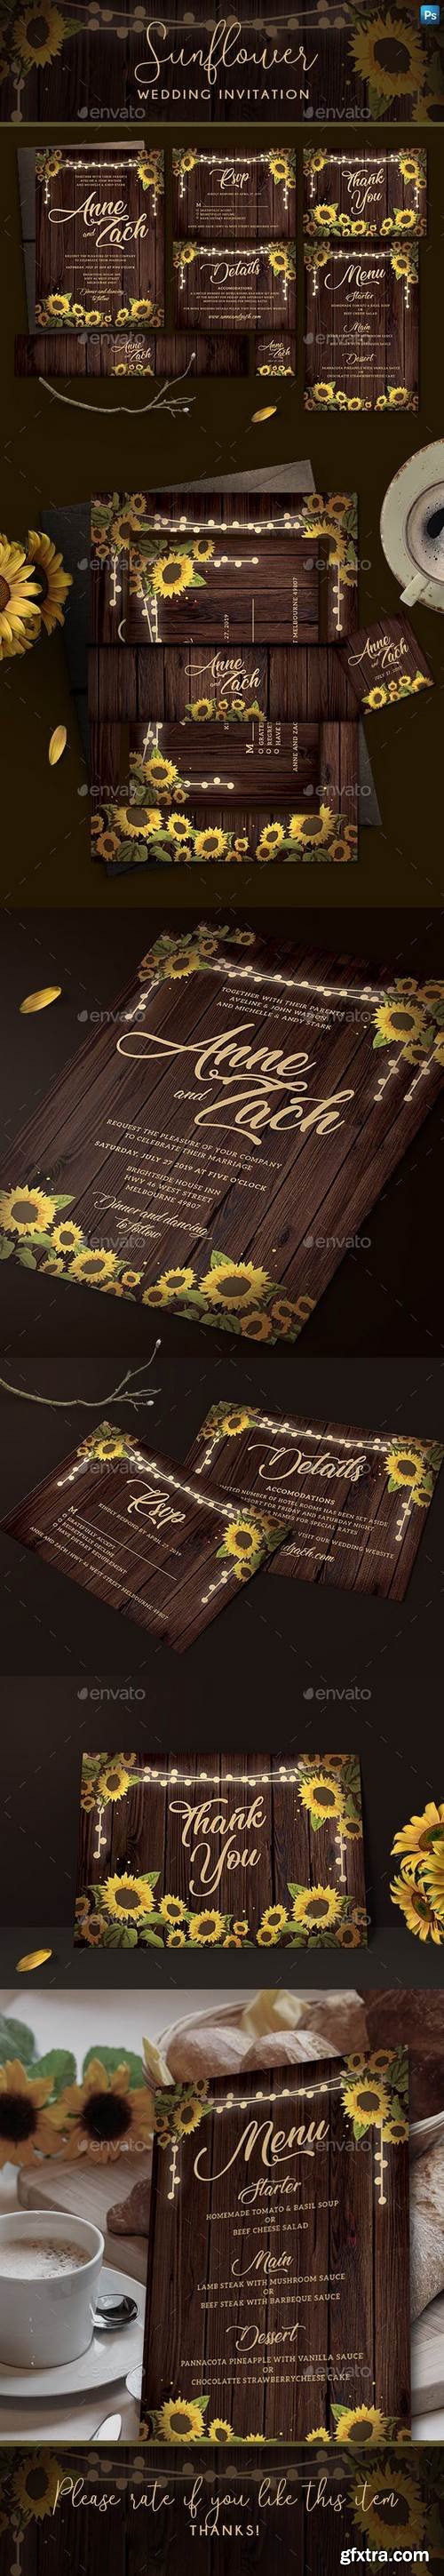 Graphicriver - Sunflower Wedding Invitation 23102696